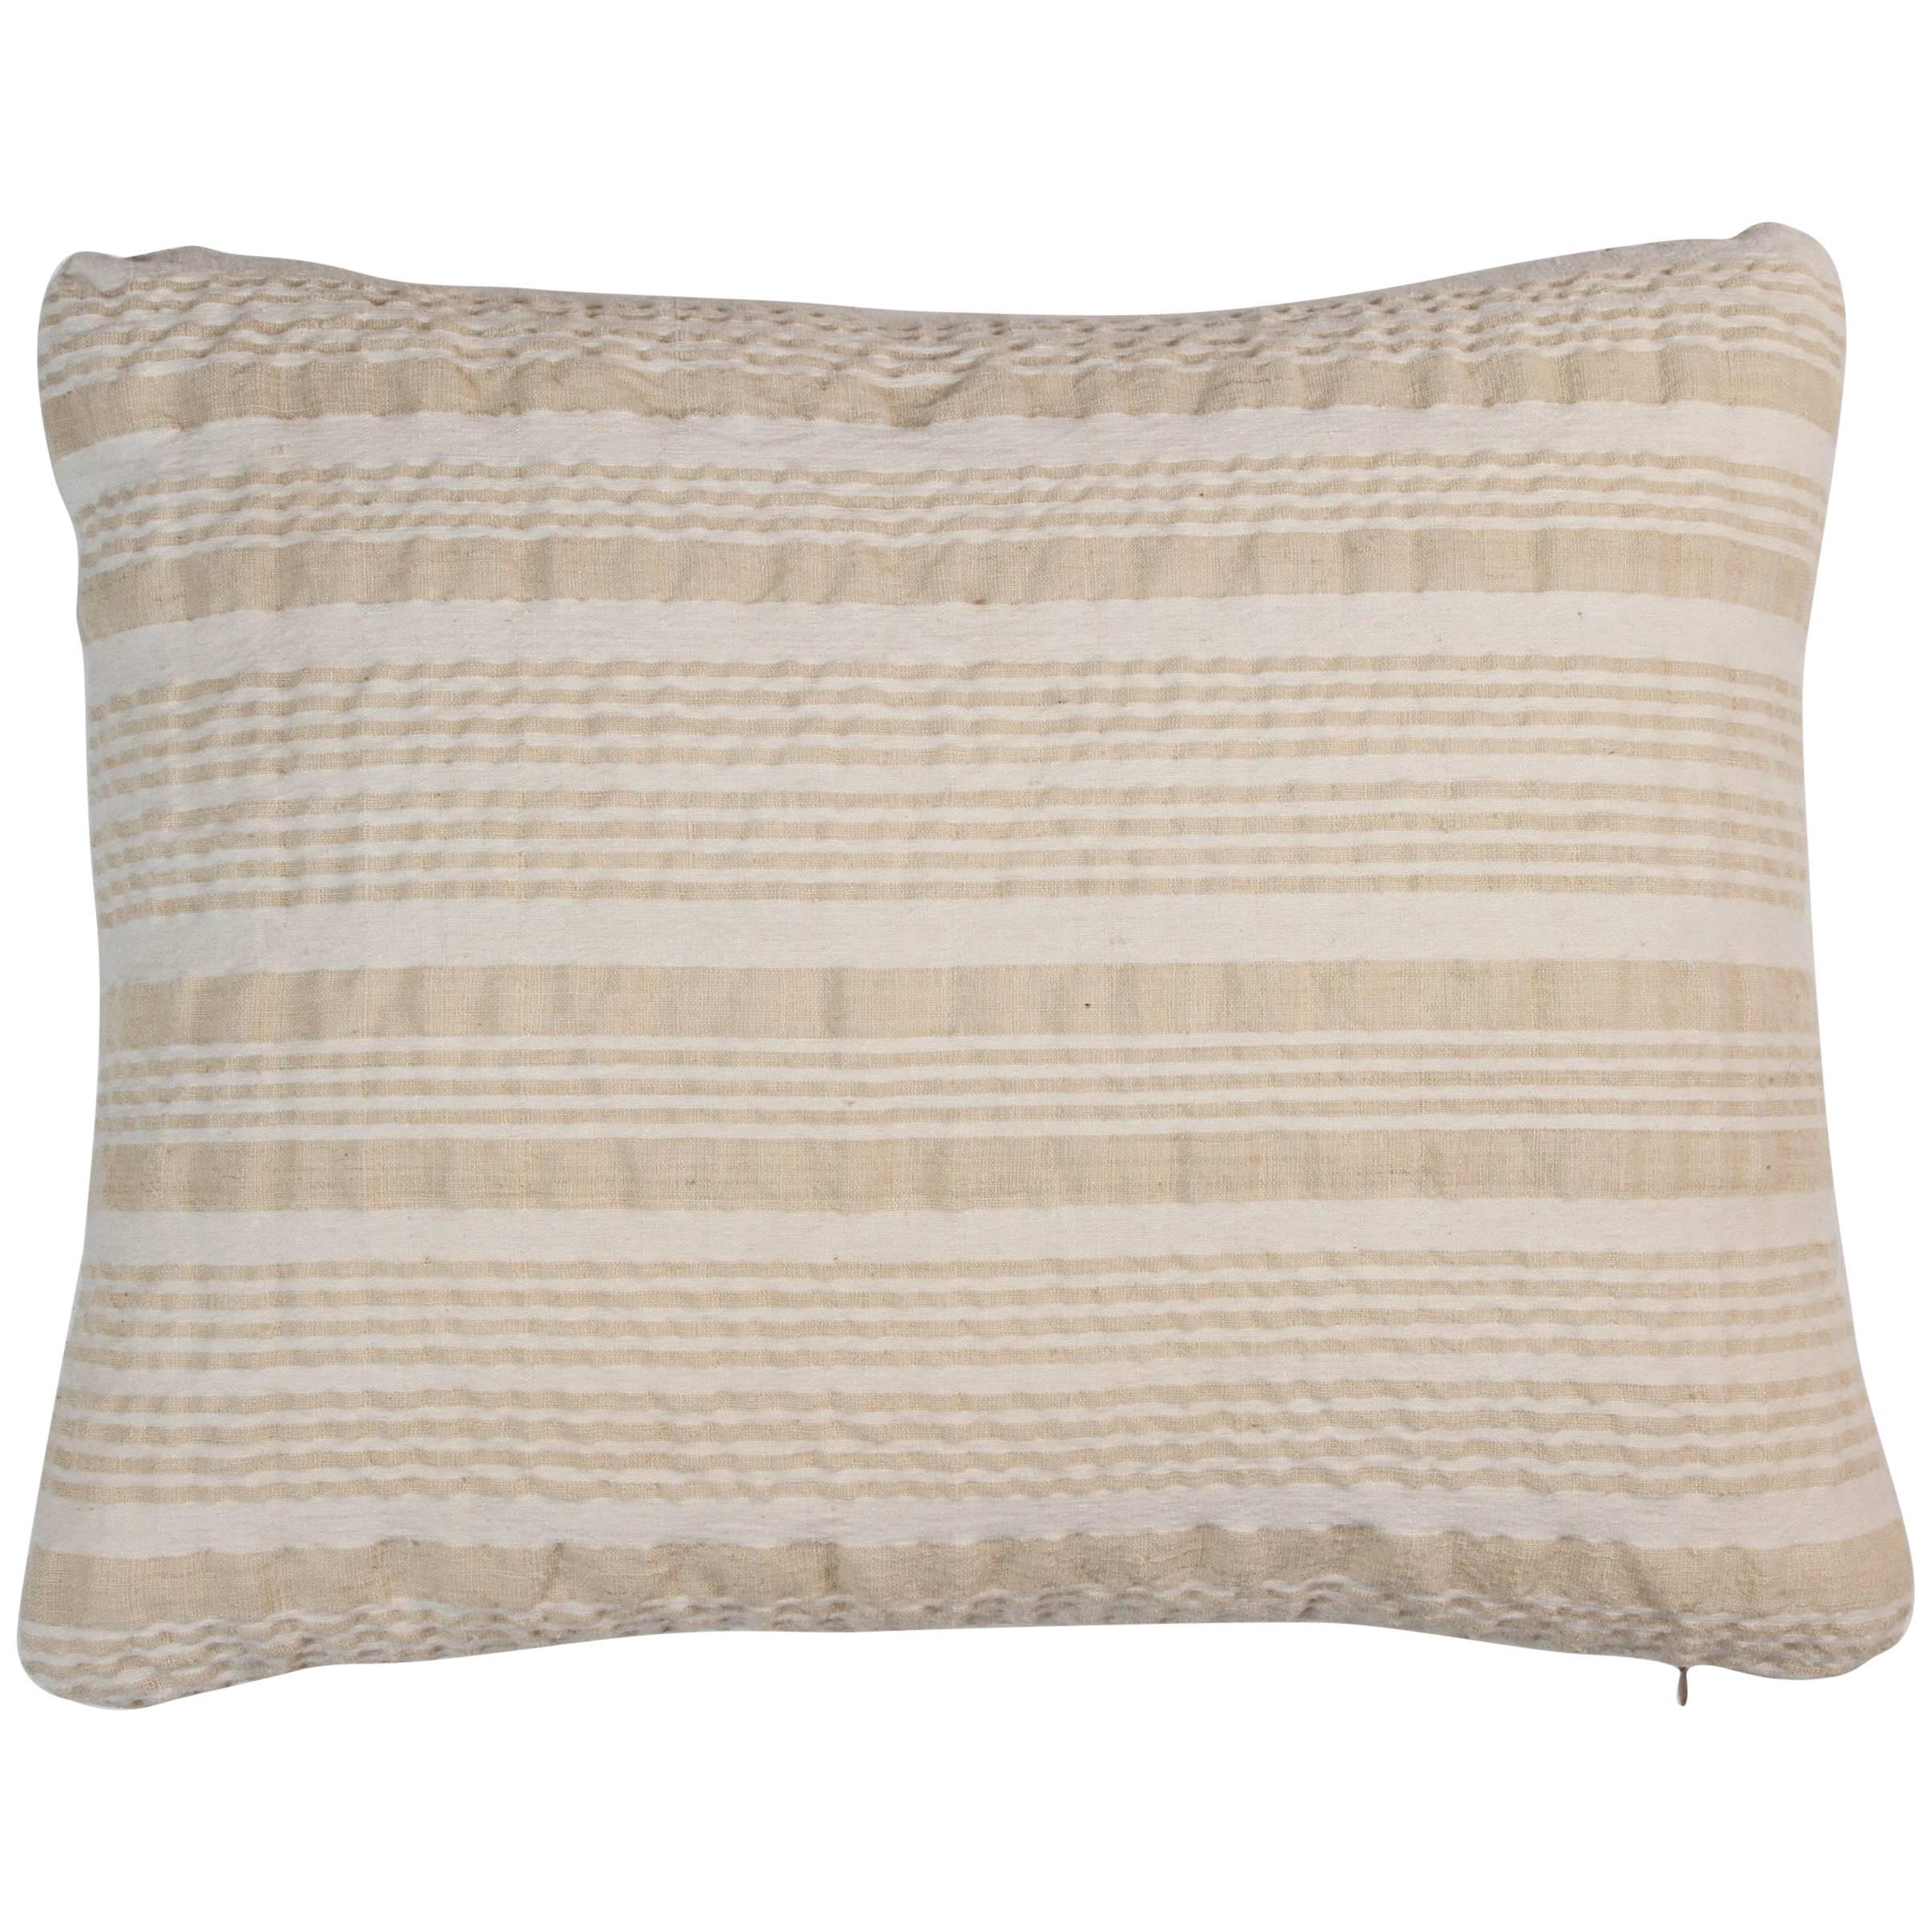 Double Sided Handwoven E. European Textile Pillow For Sale